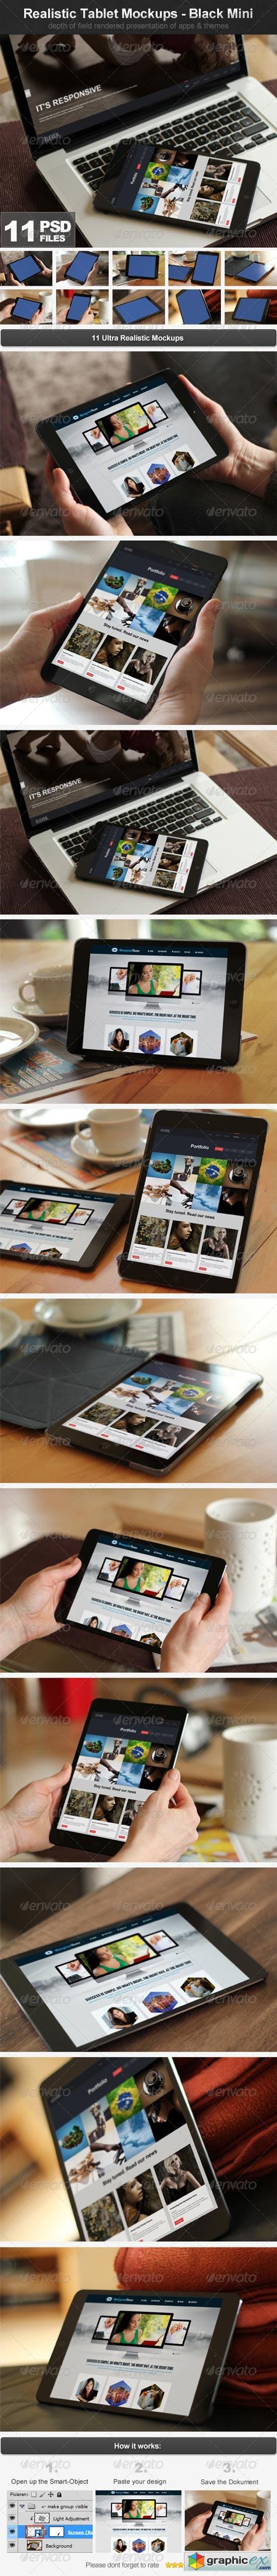 Realistic Tablet Mockups - Black Mini